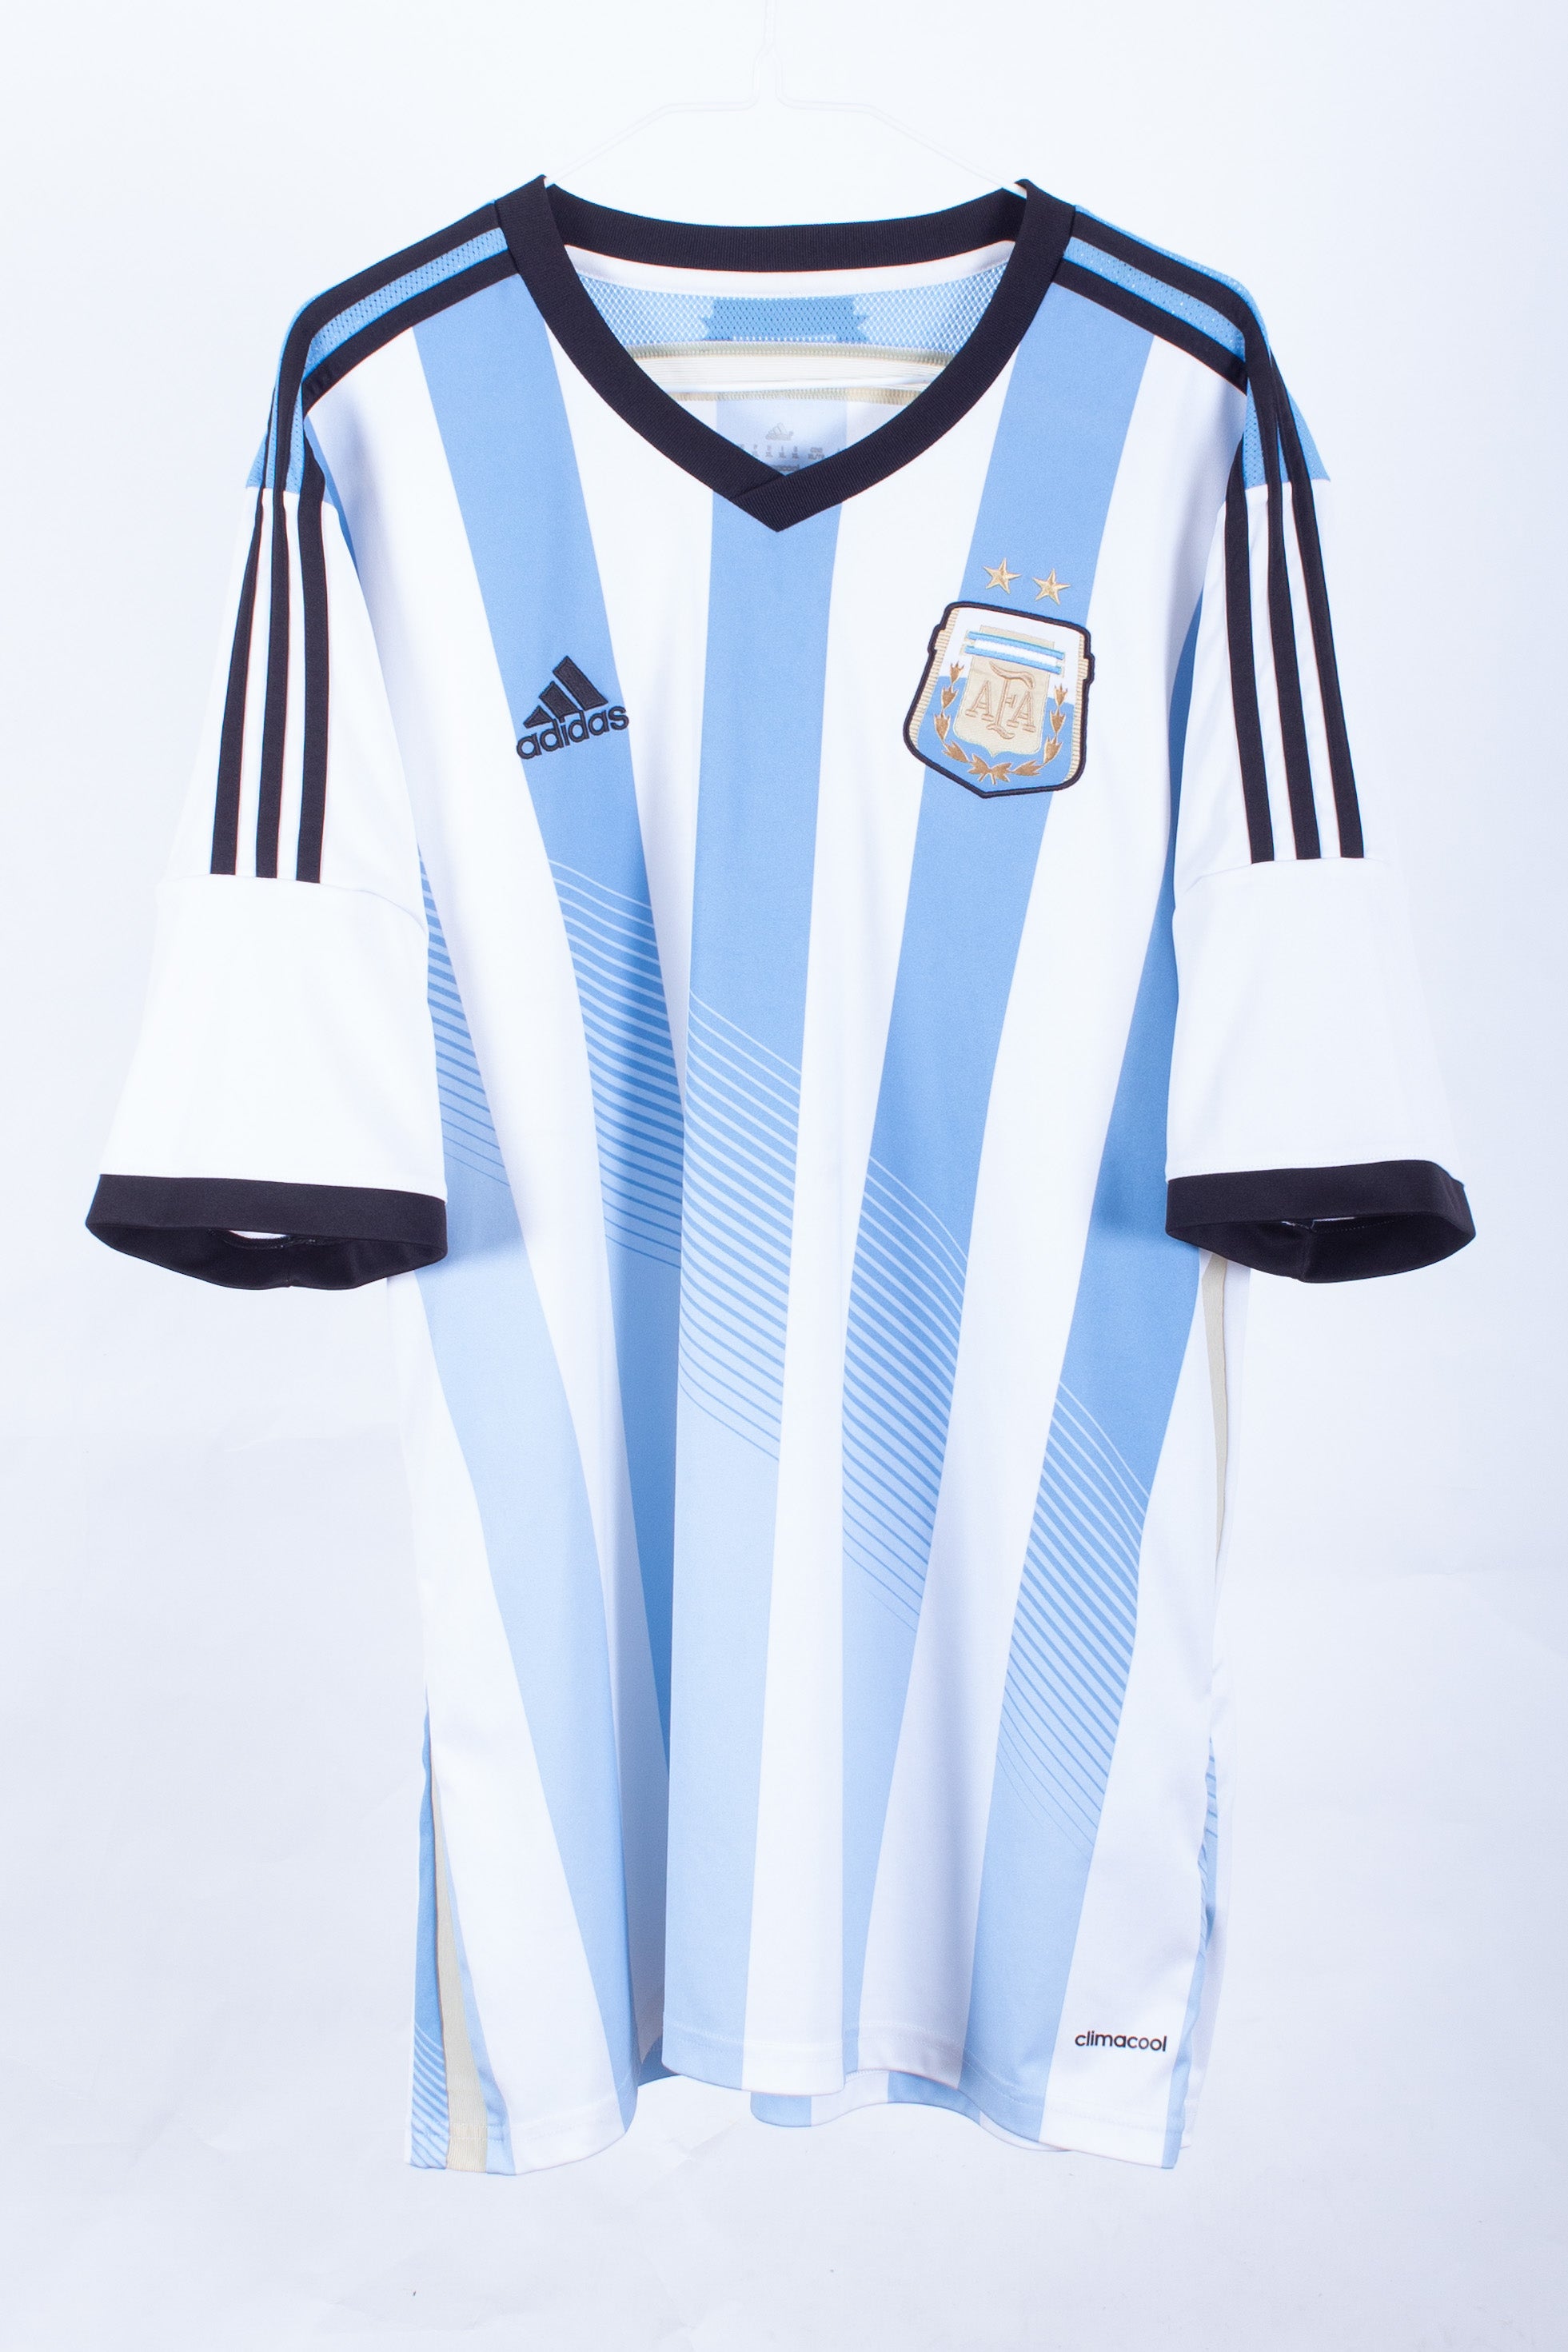 Argentina 2014 Home Shirt | Vintage International Football Shirt